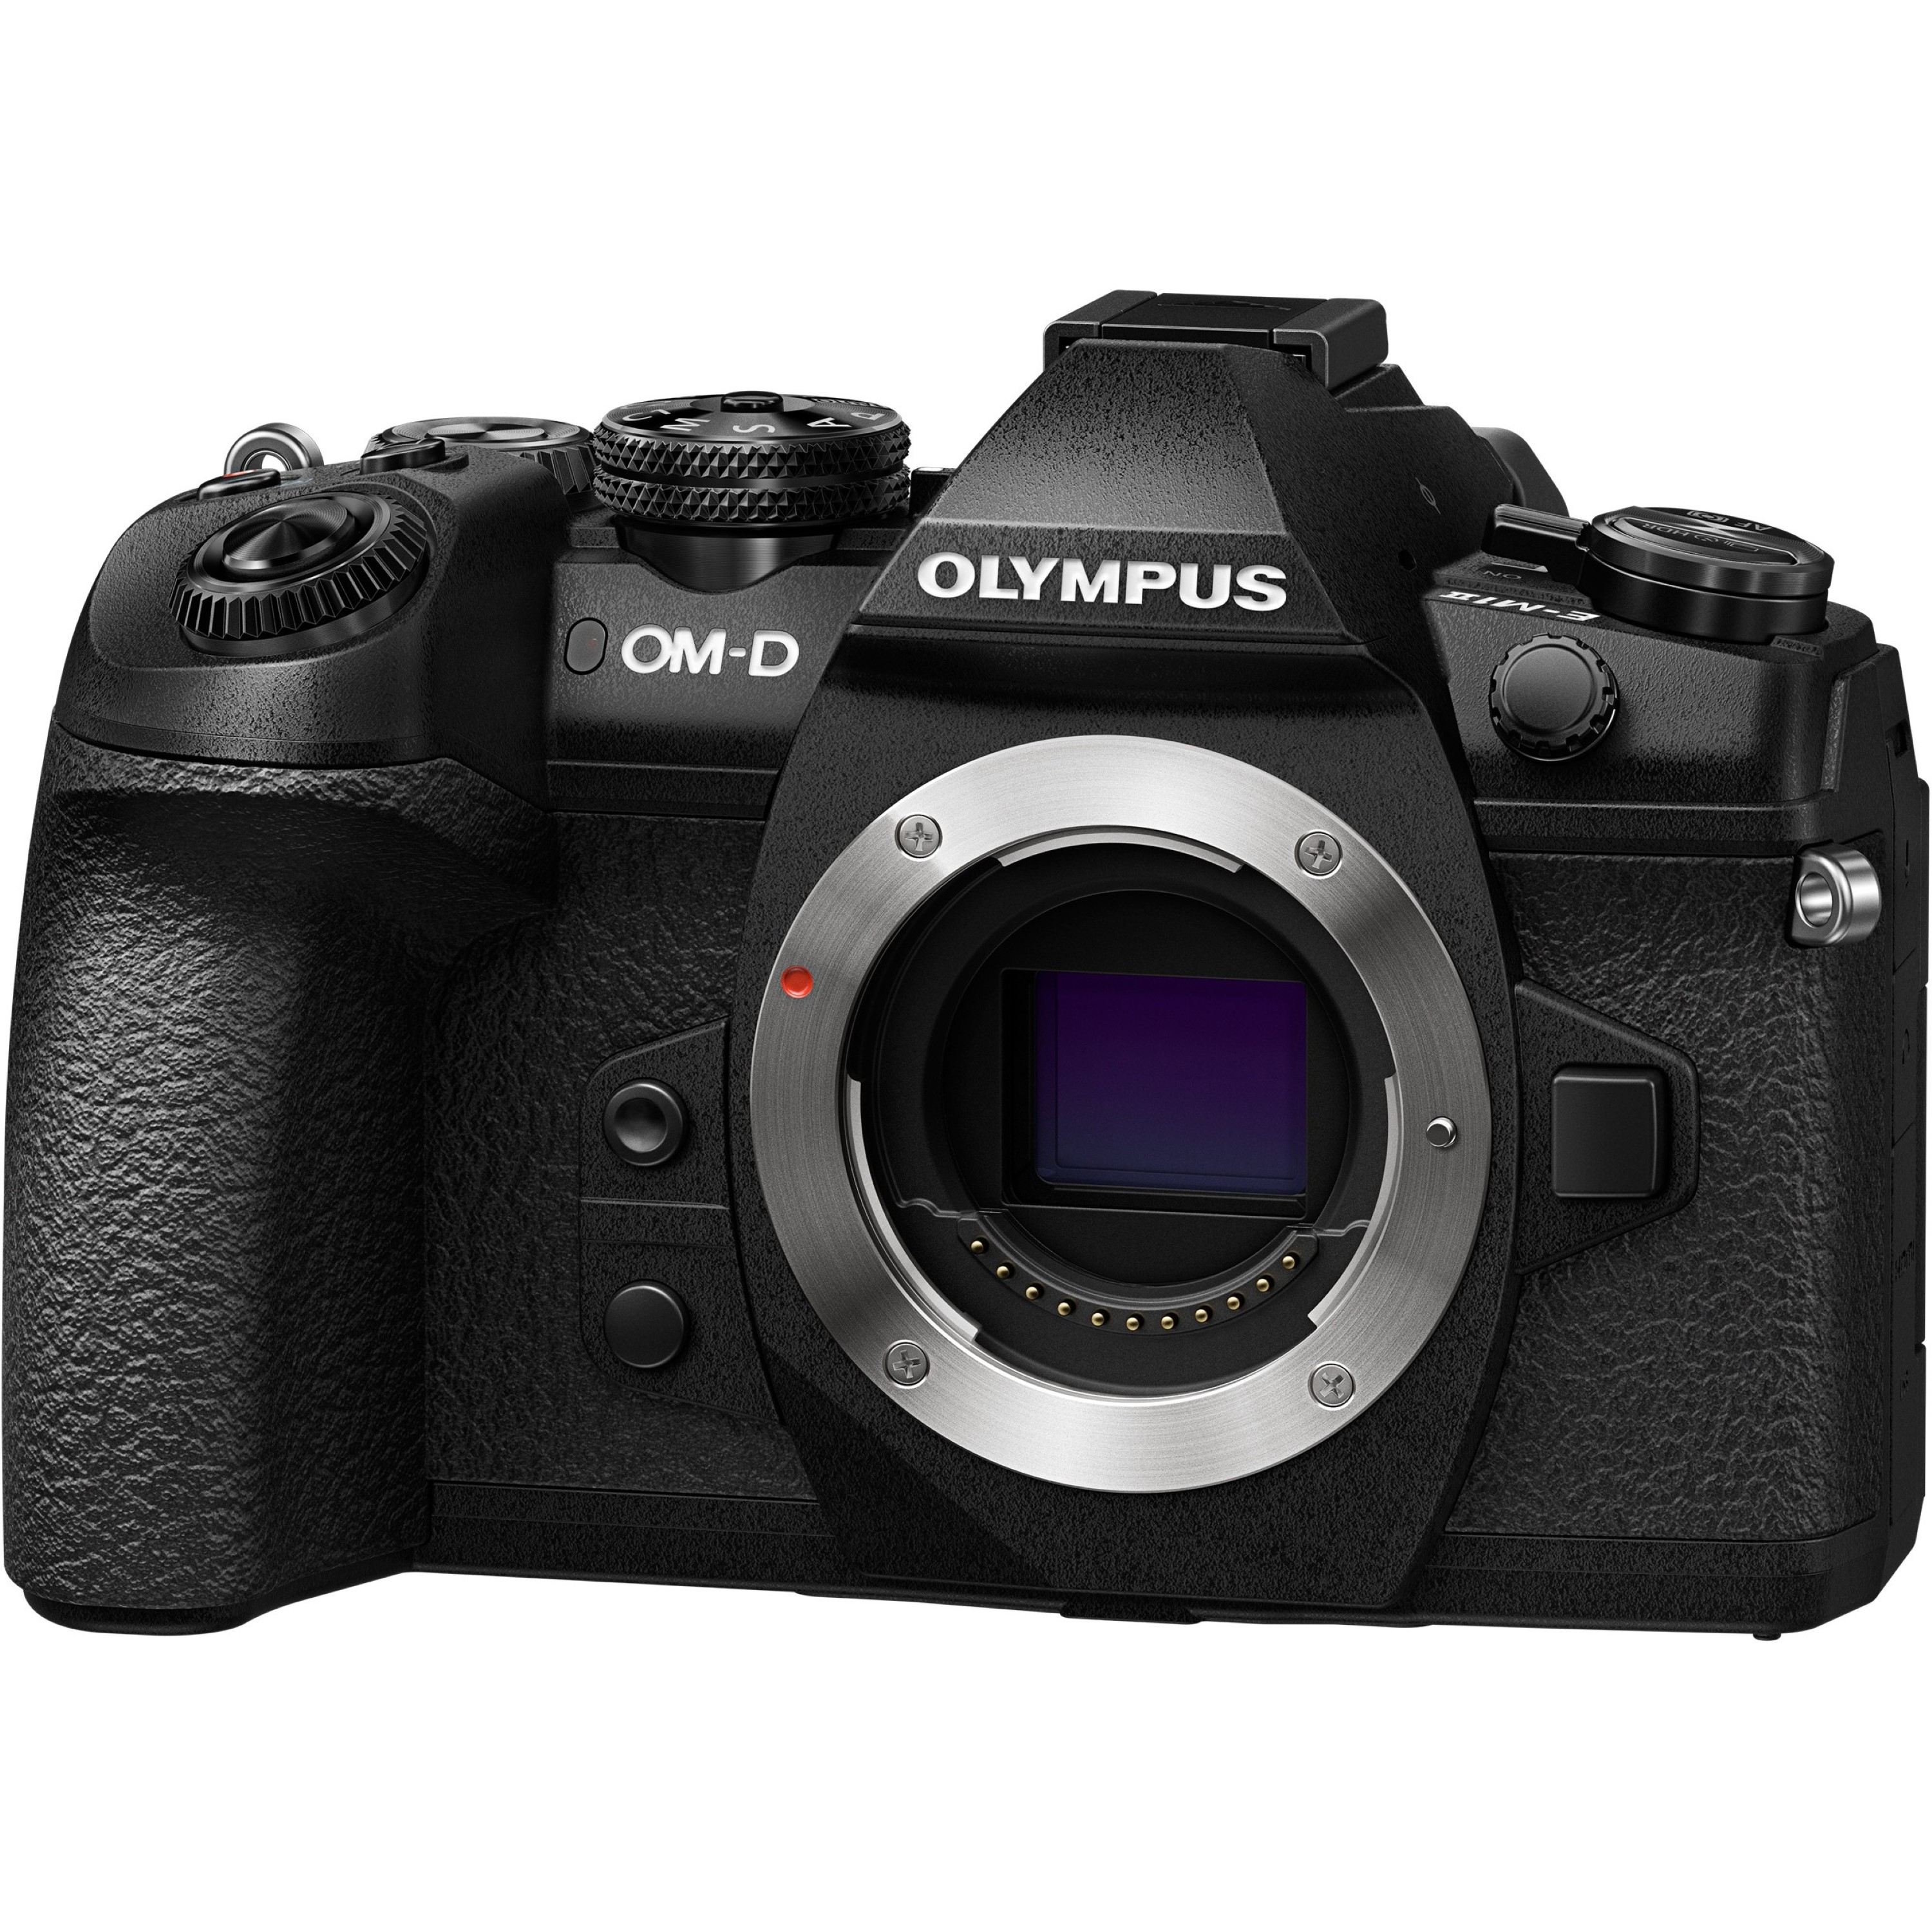 Olympus V207060BU000 OM-D E-M1 Mark II Mirrorless Camera Body Only - Black - image 4 of 5